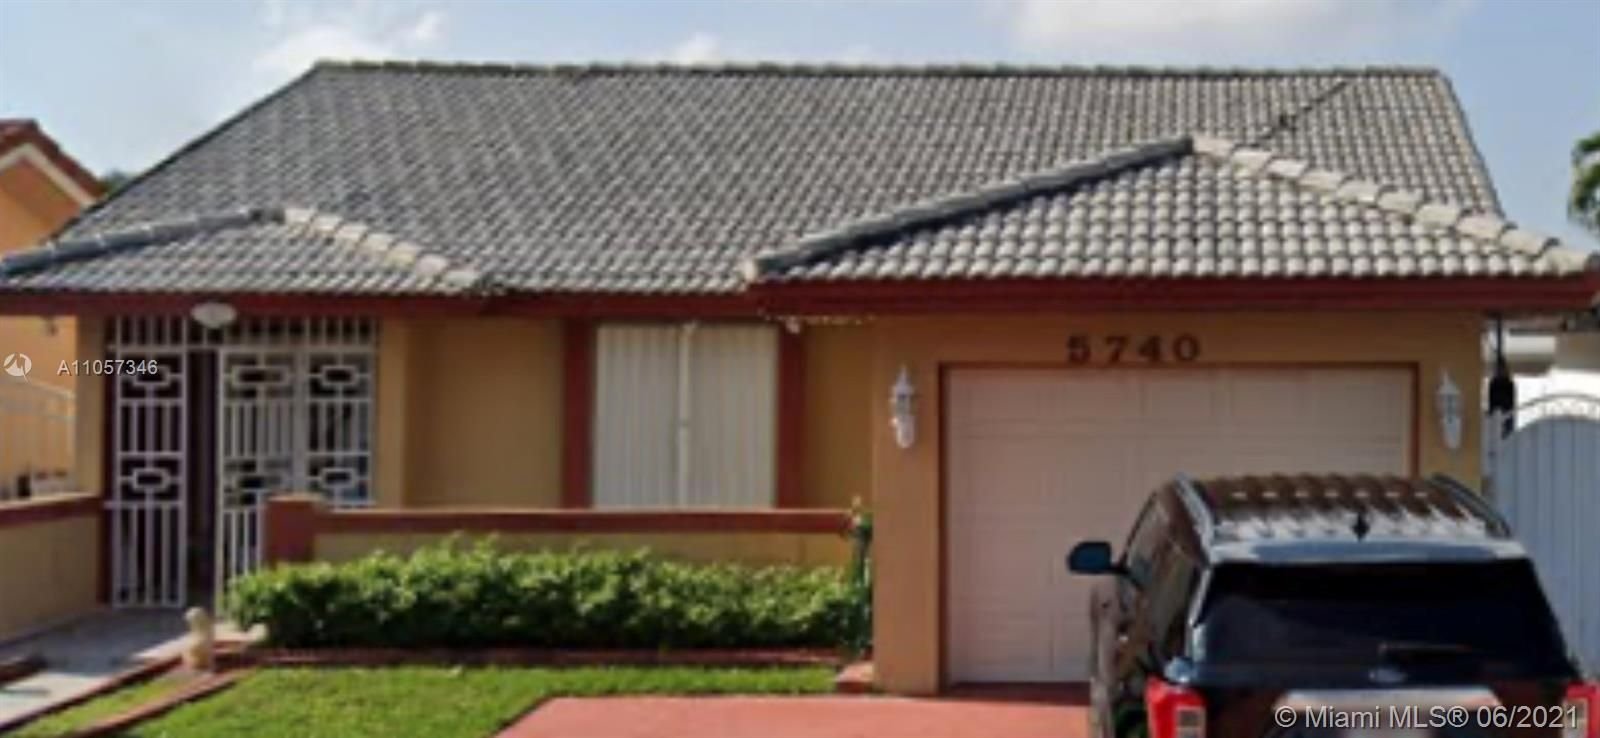 Real estate property located at 5740 149th Ave, Miami-Dade County, Miami, FL